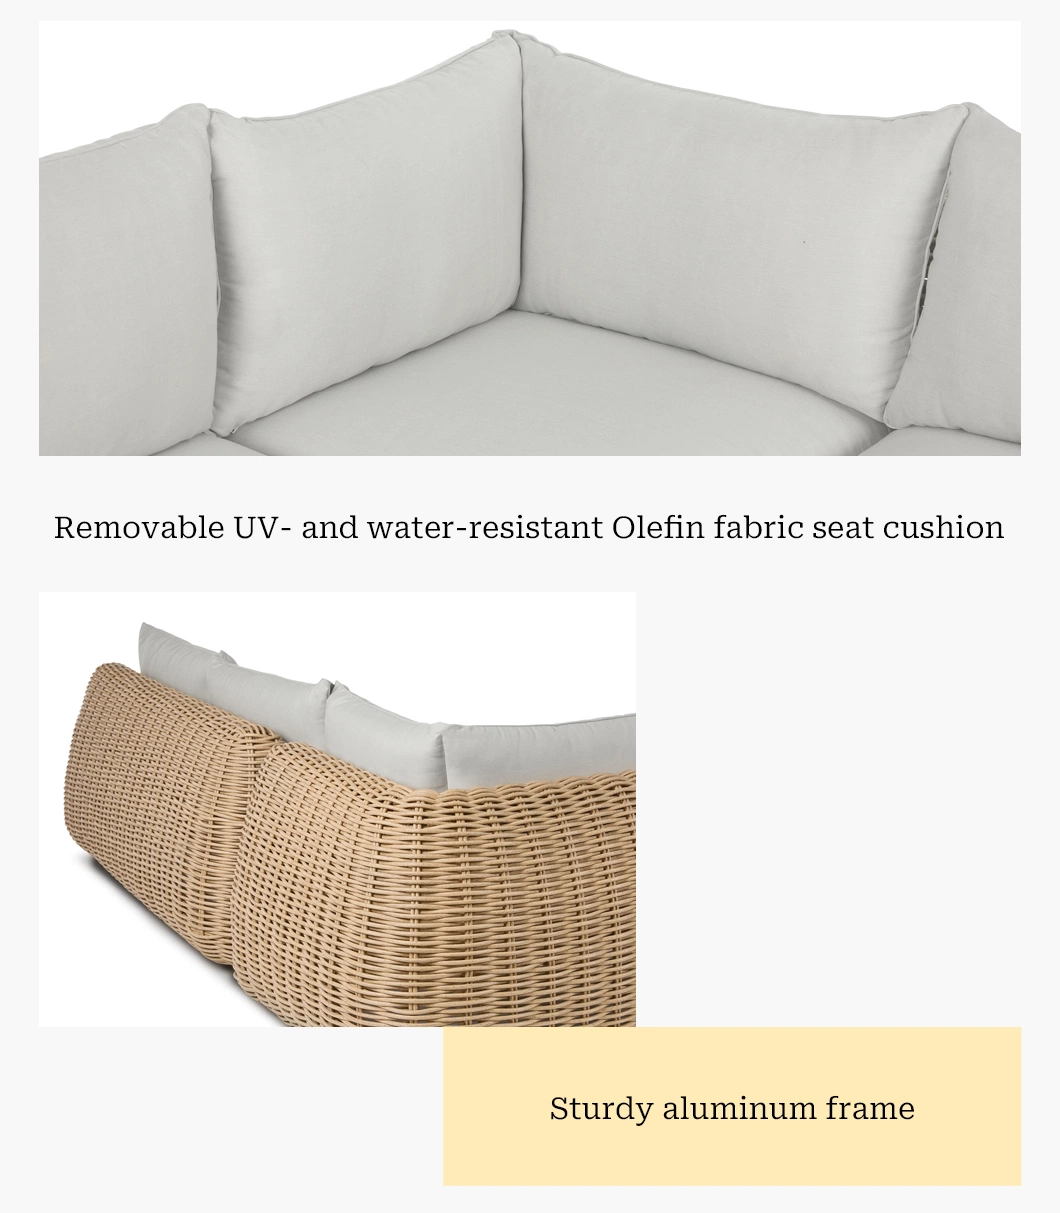 Popular Design Bamboo Outdoor Sofa Terrace Rattan Furniture with Garden Set